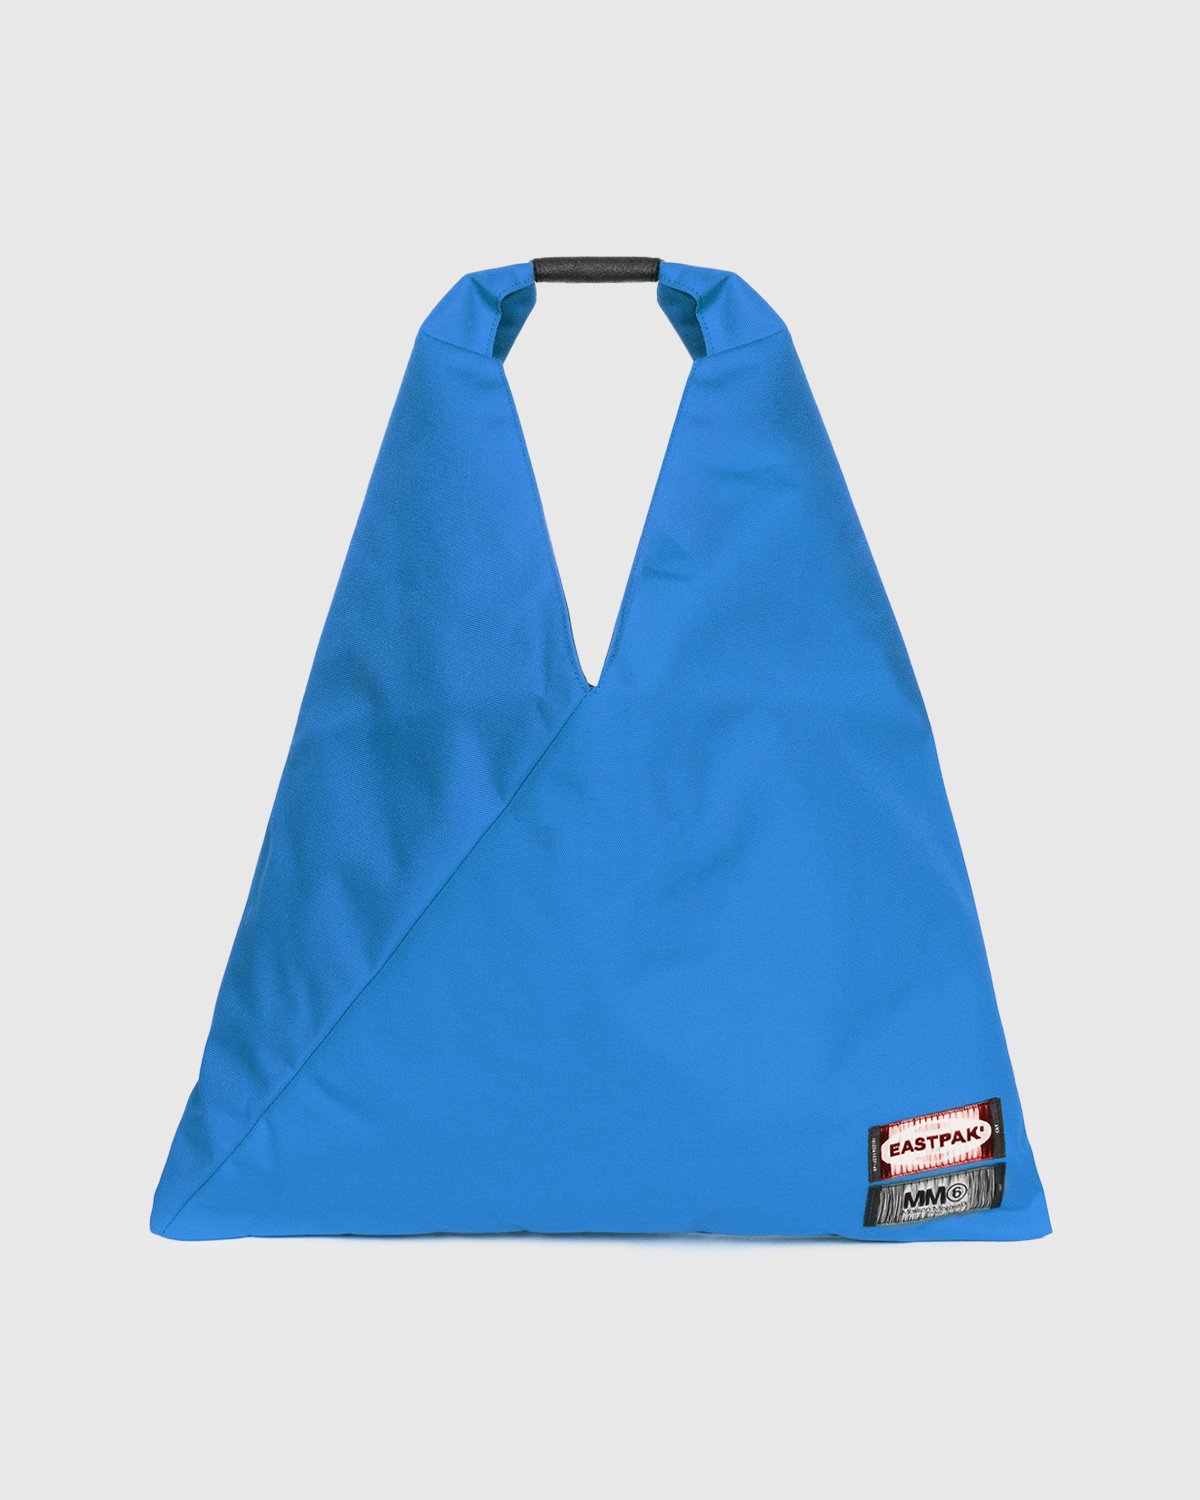 MM6 Maison Margiela x Eastpak - Shopping Bag Dazzling Blue - Accessories - Blue - Image 1